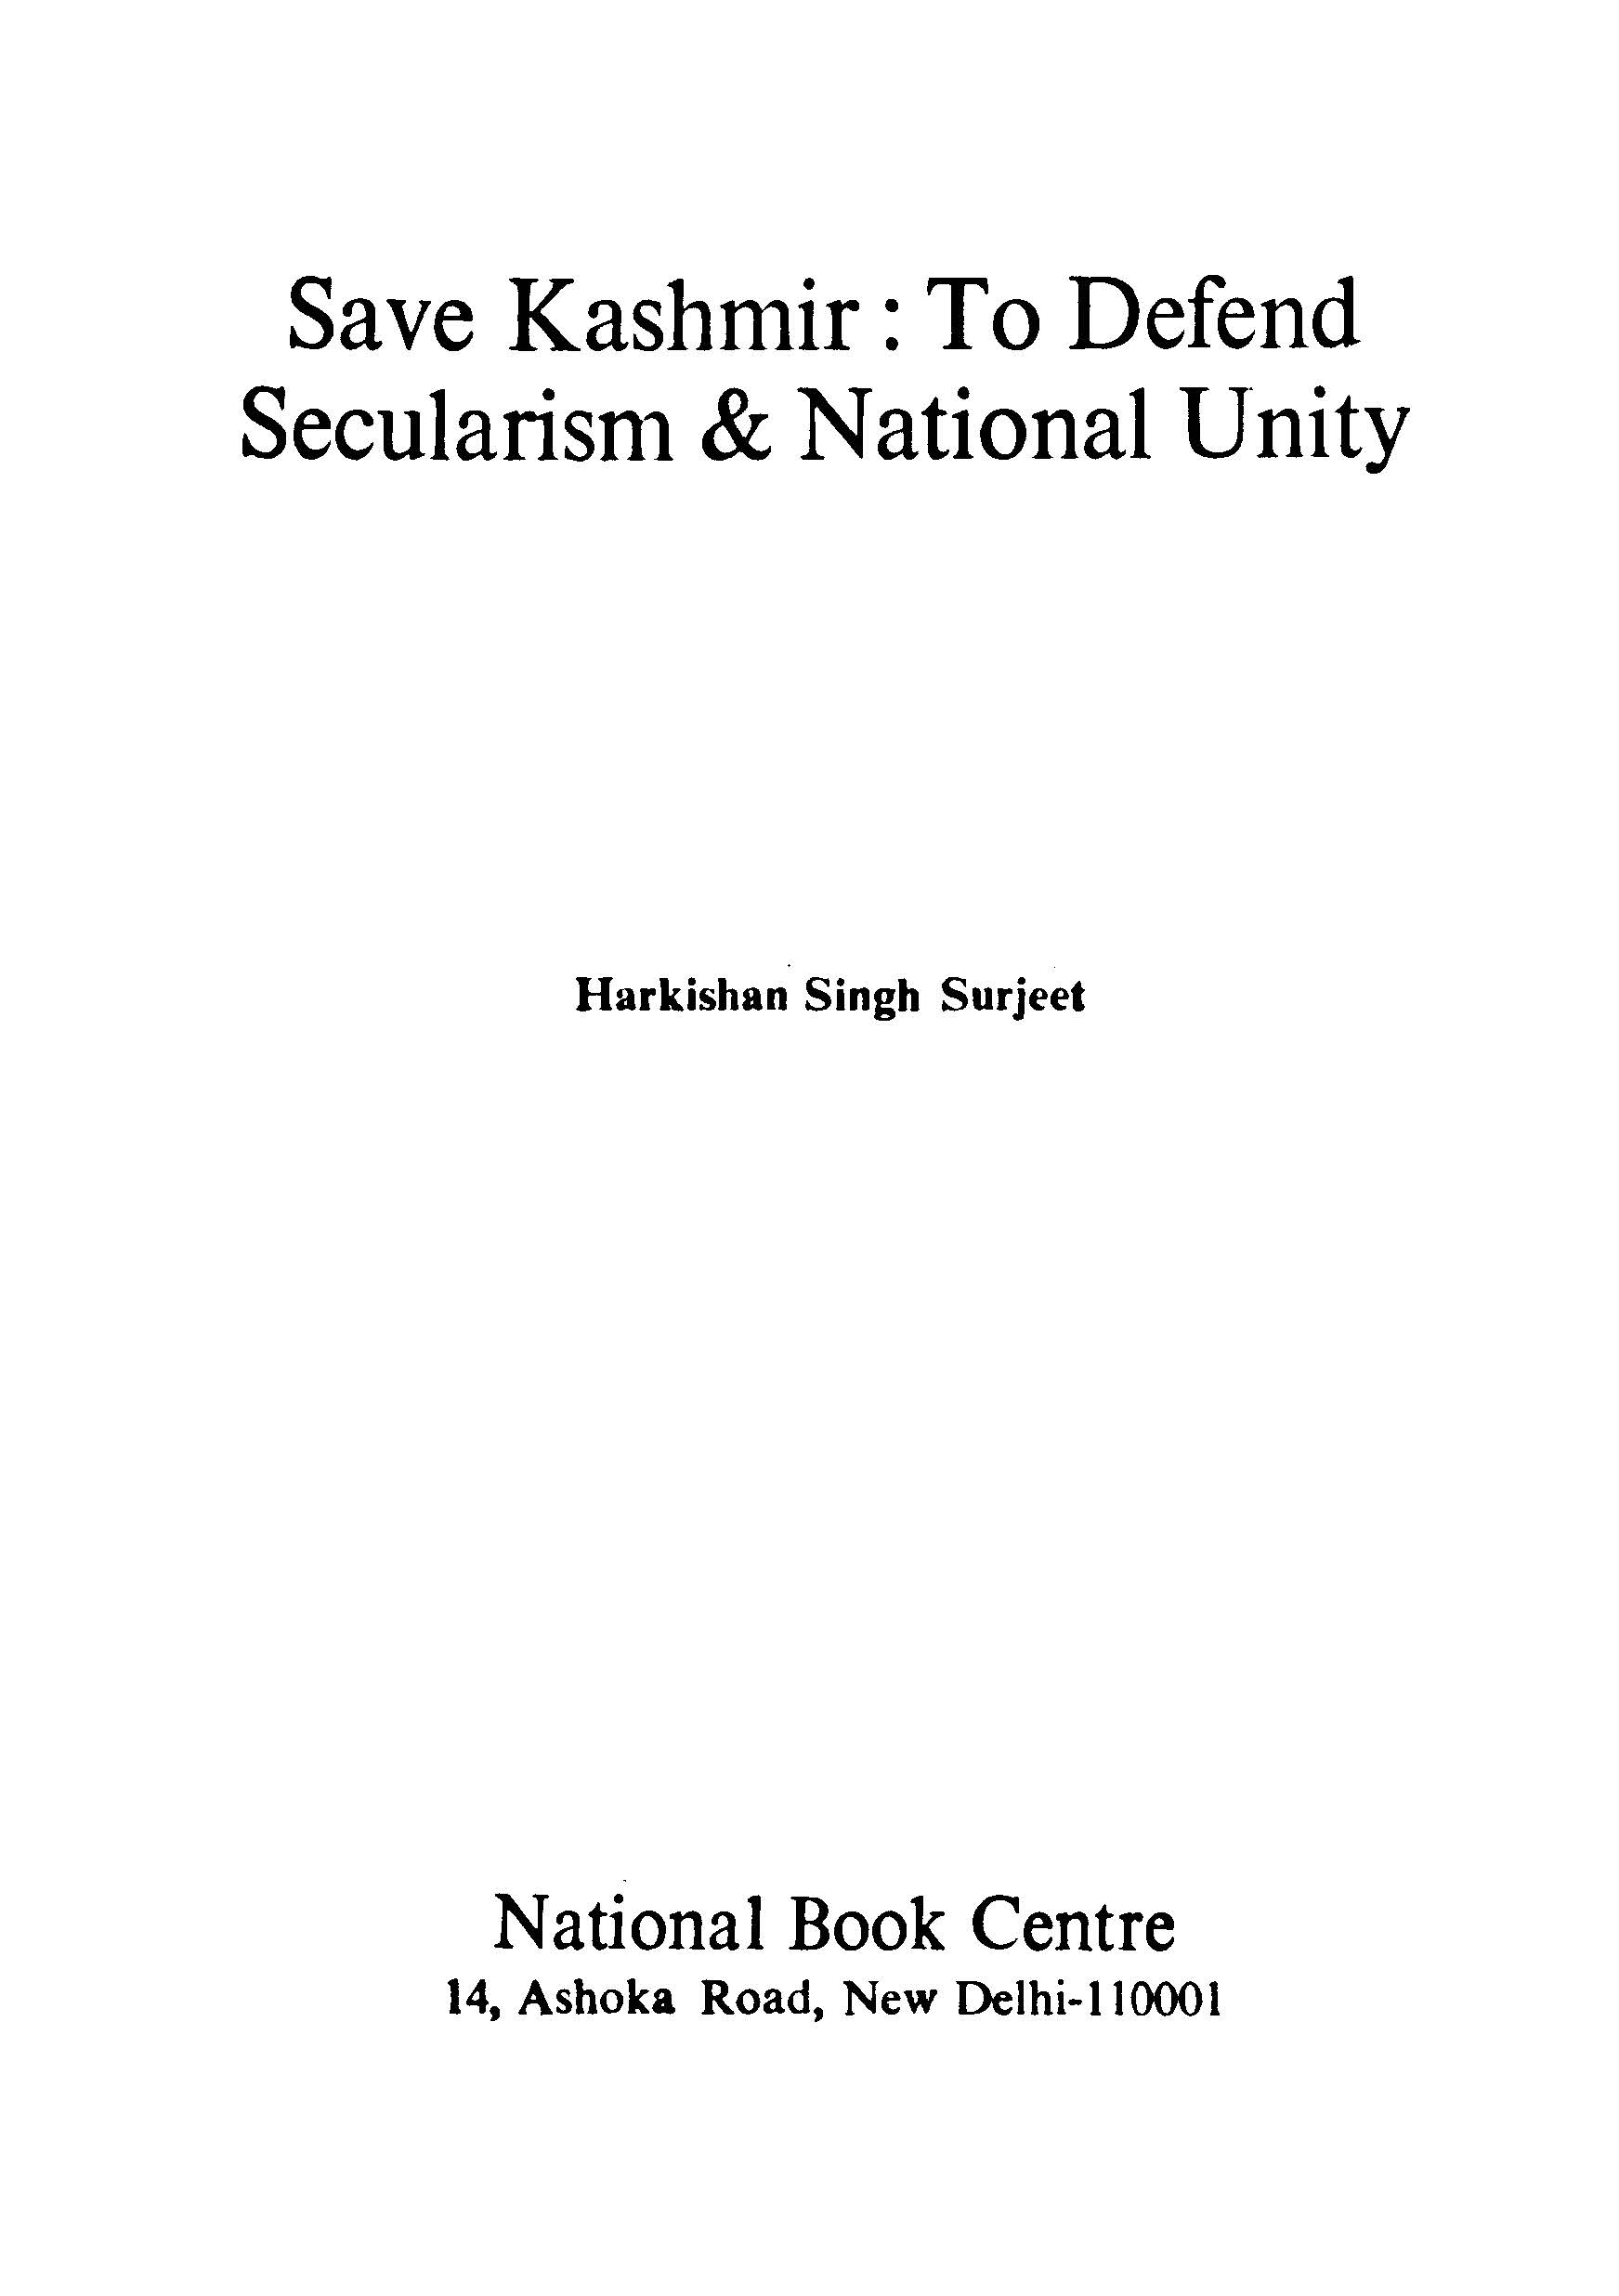 Save kashmir:To defend secularism&national unity